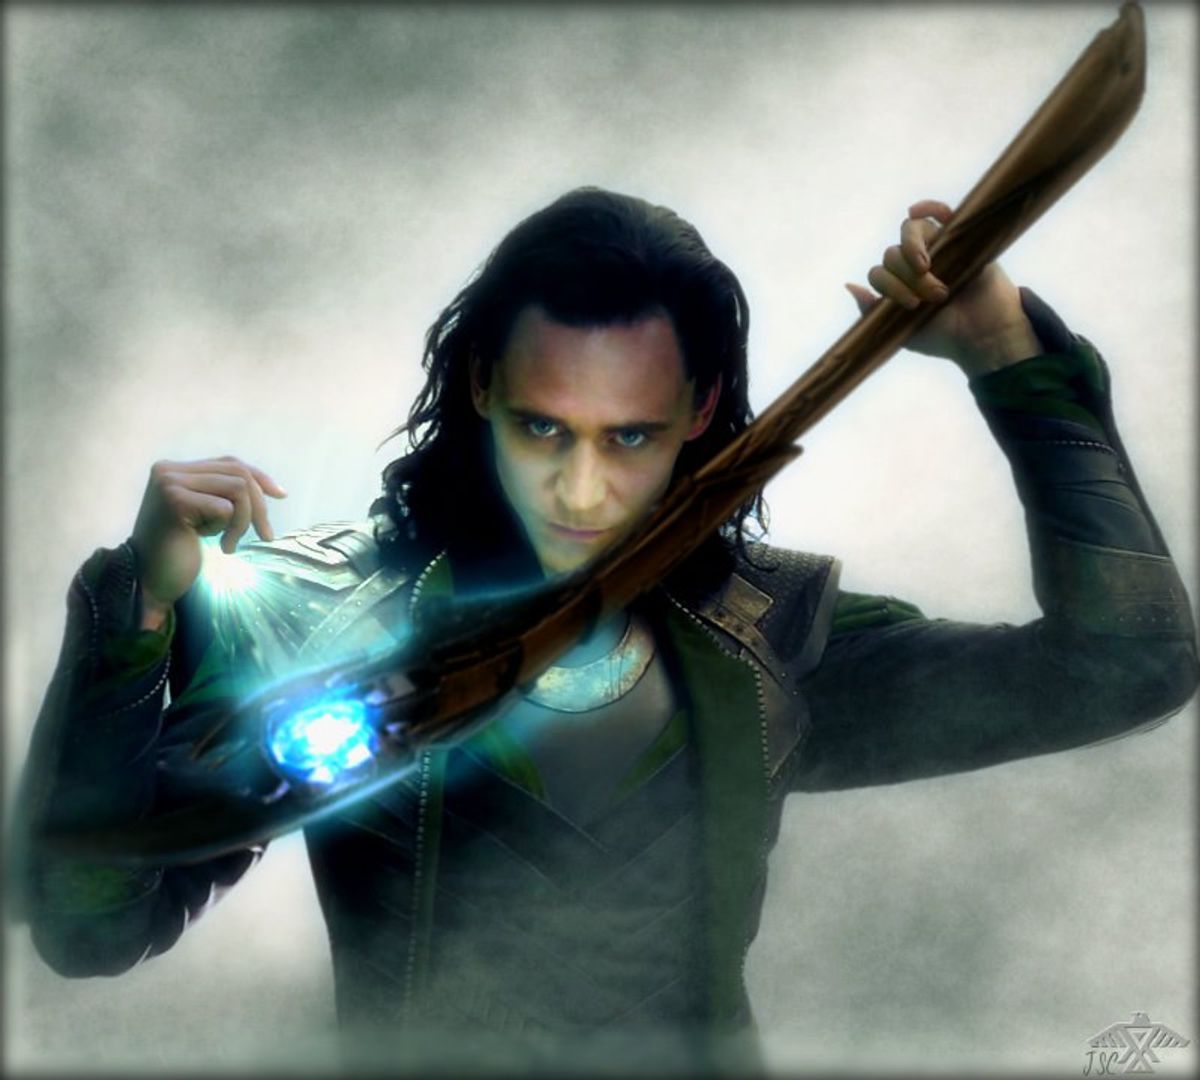 My Favorite Villian, Loki!